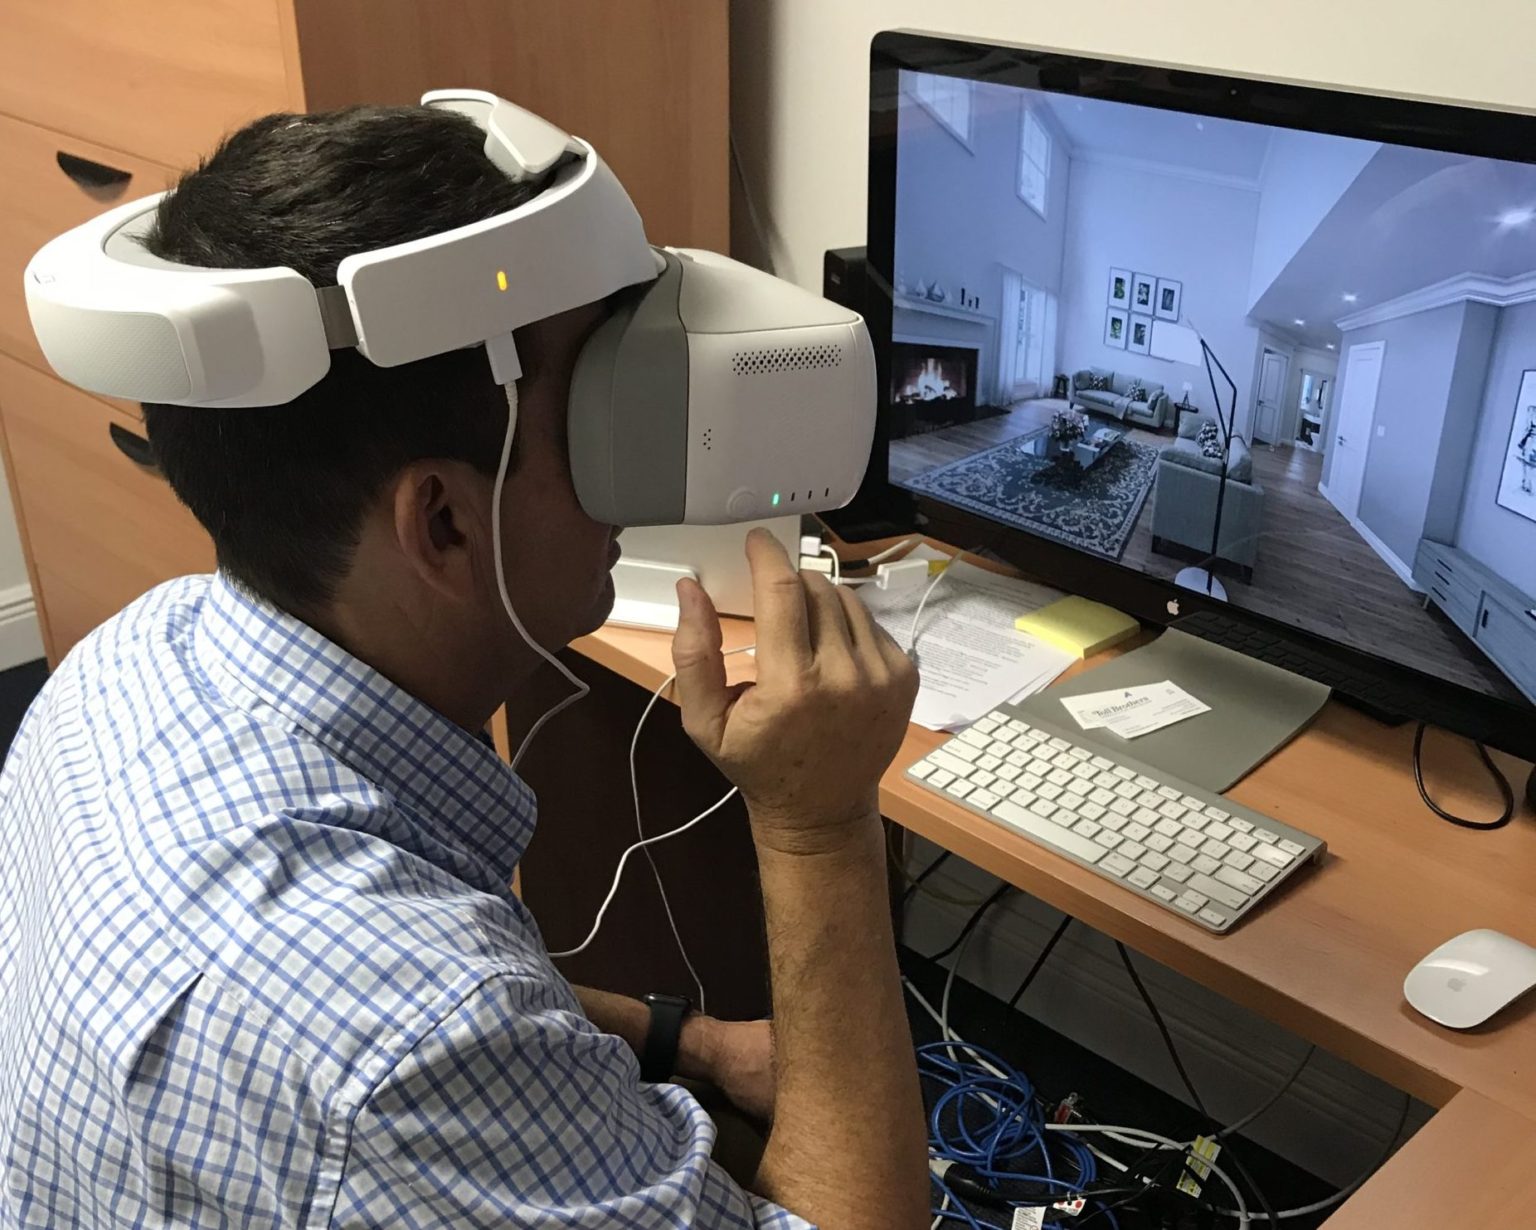 google virtual reality tours